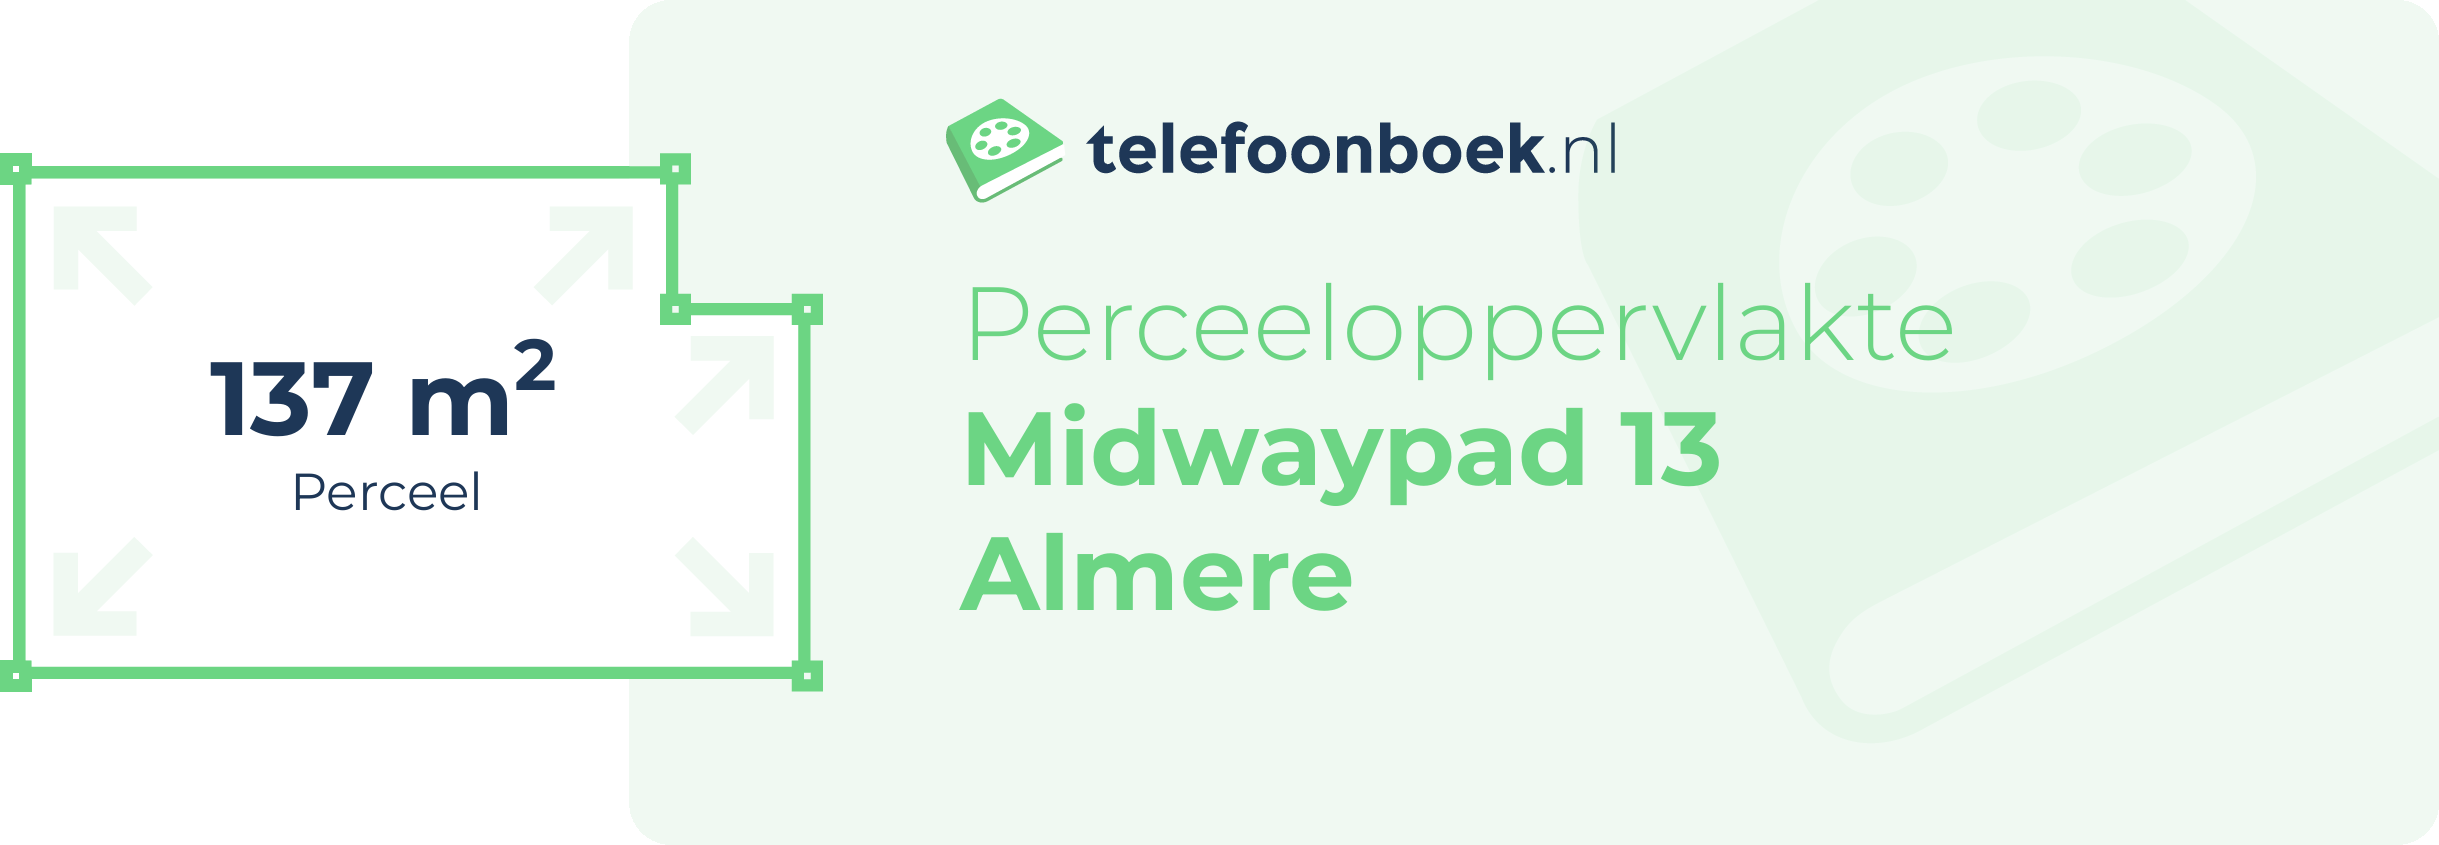 Perceeloppervlakte Midwaypad 13 Almere